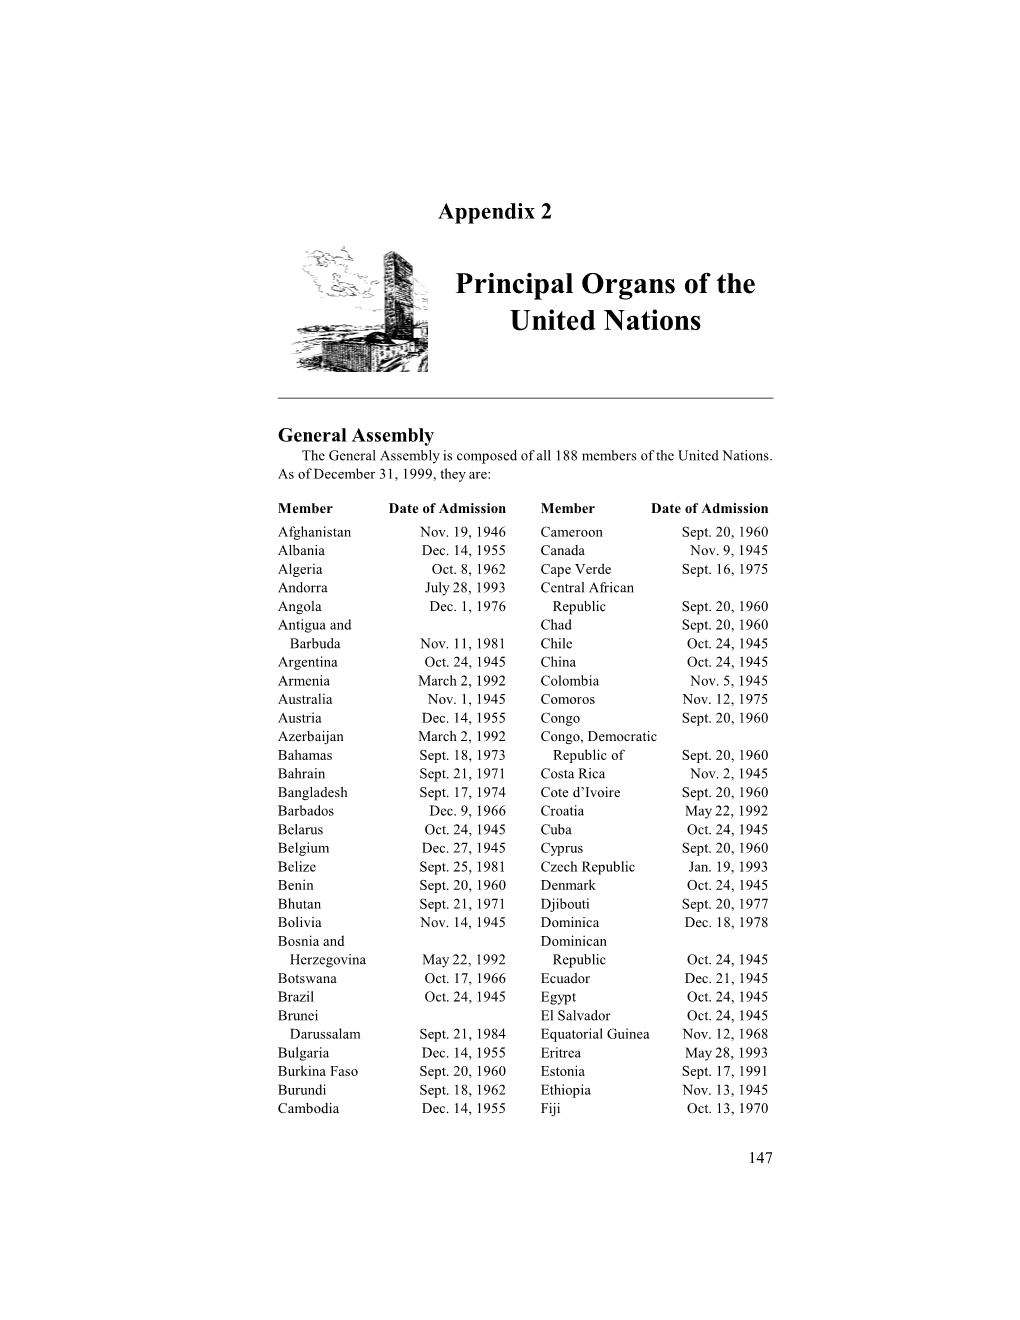 Principal Organs of the United Nations